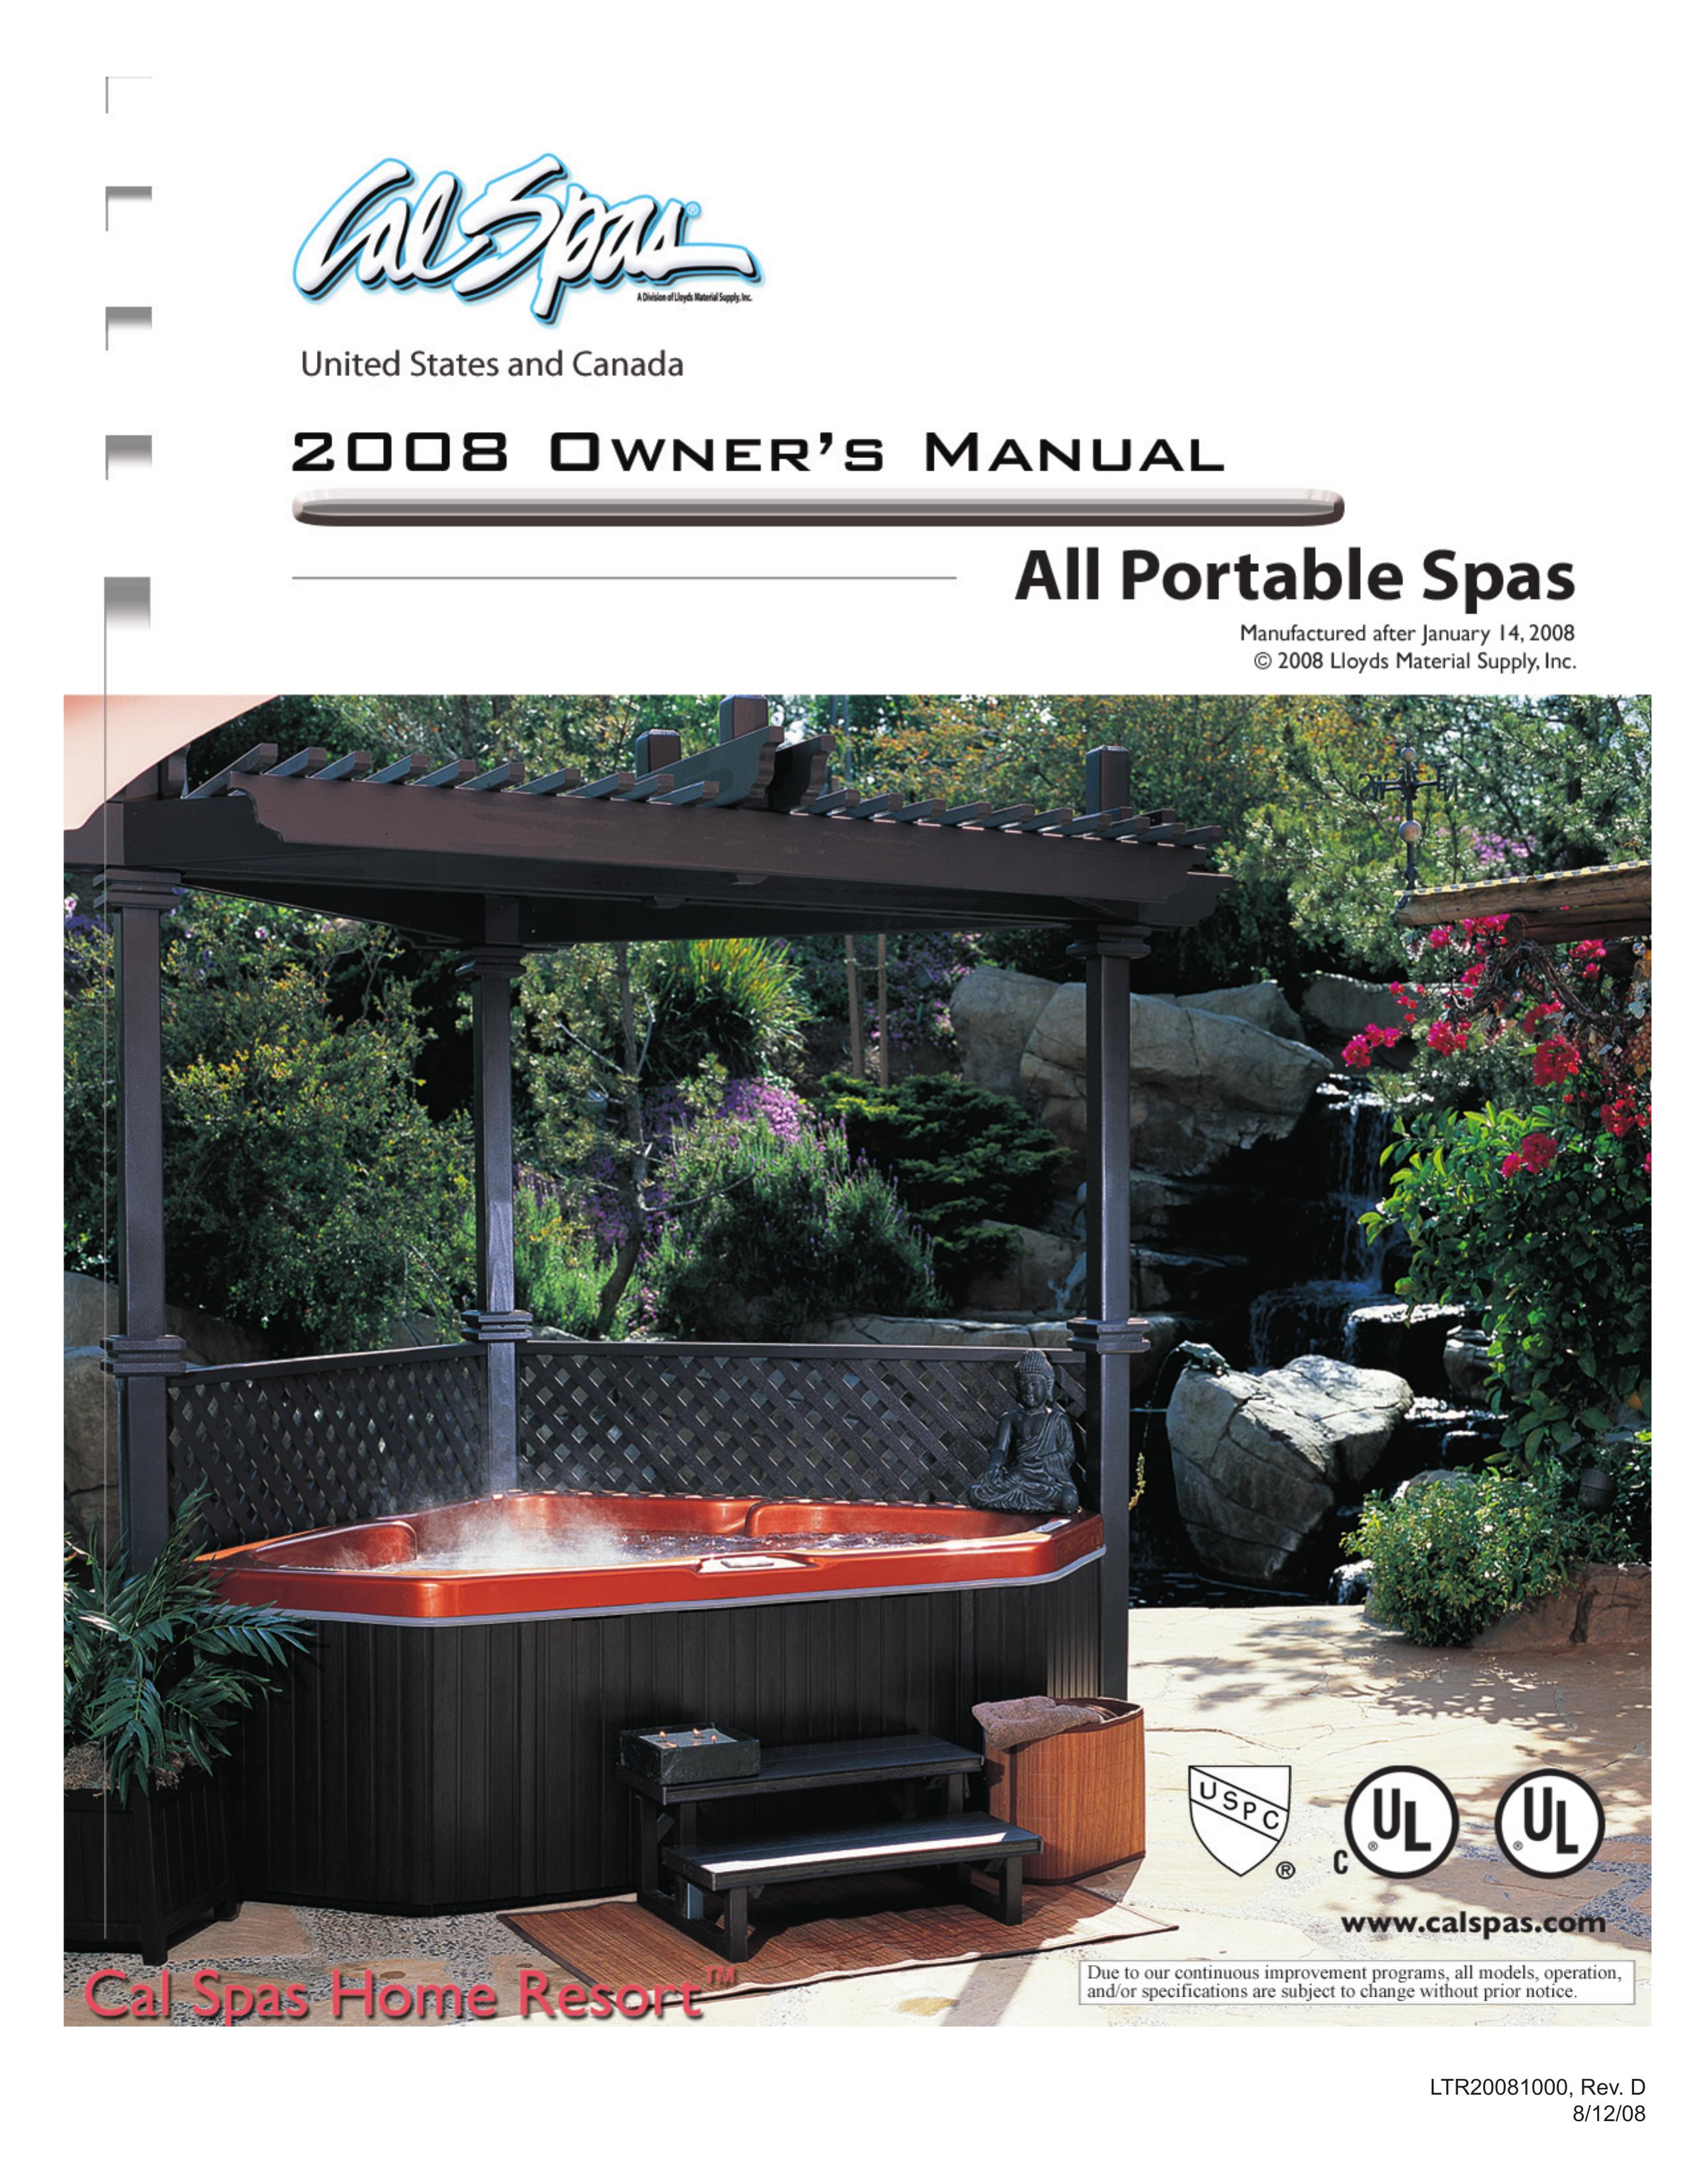 Cal Spas GFCI Hot Tub User Manual